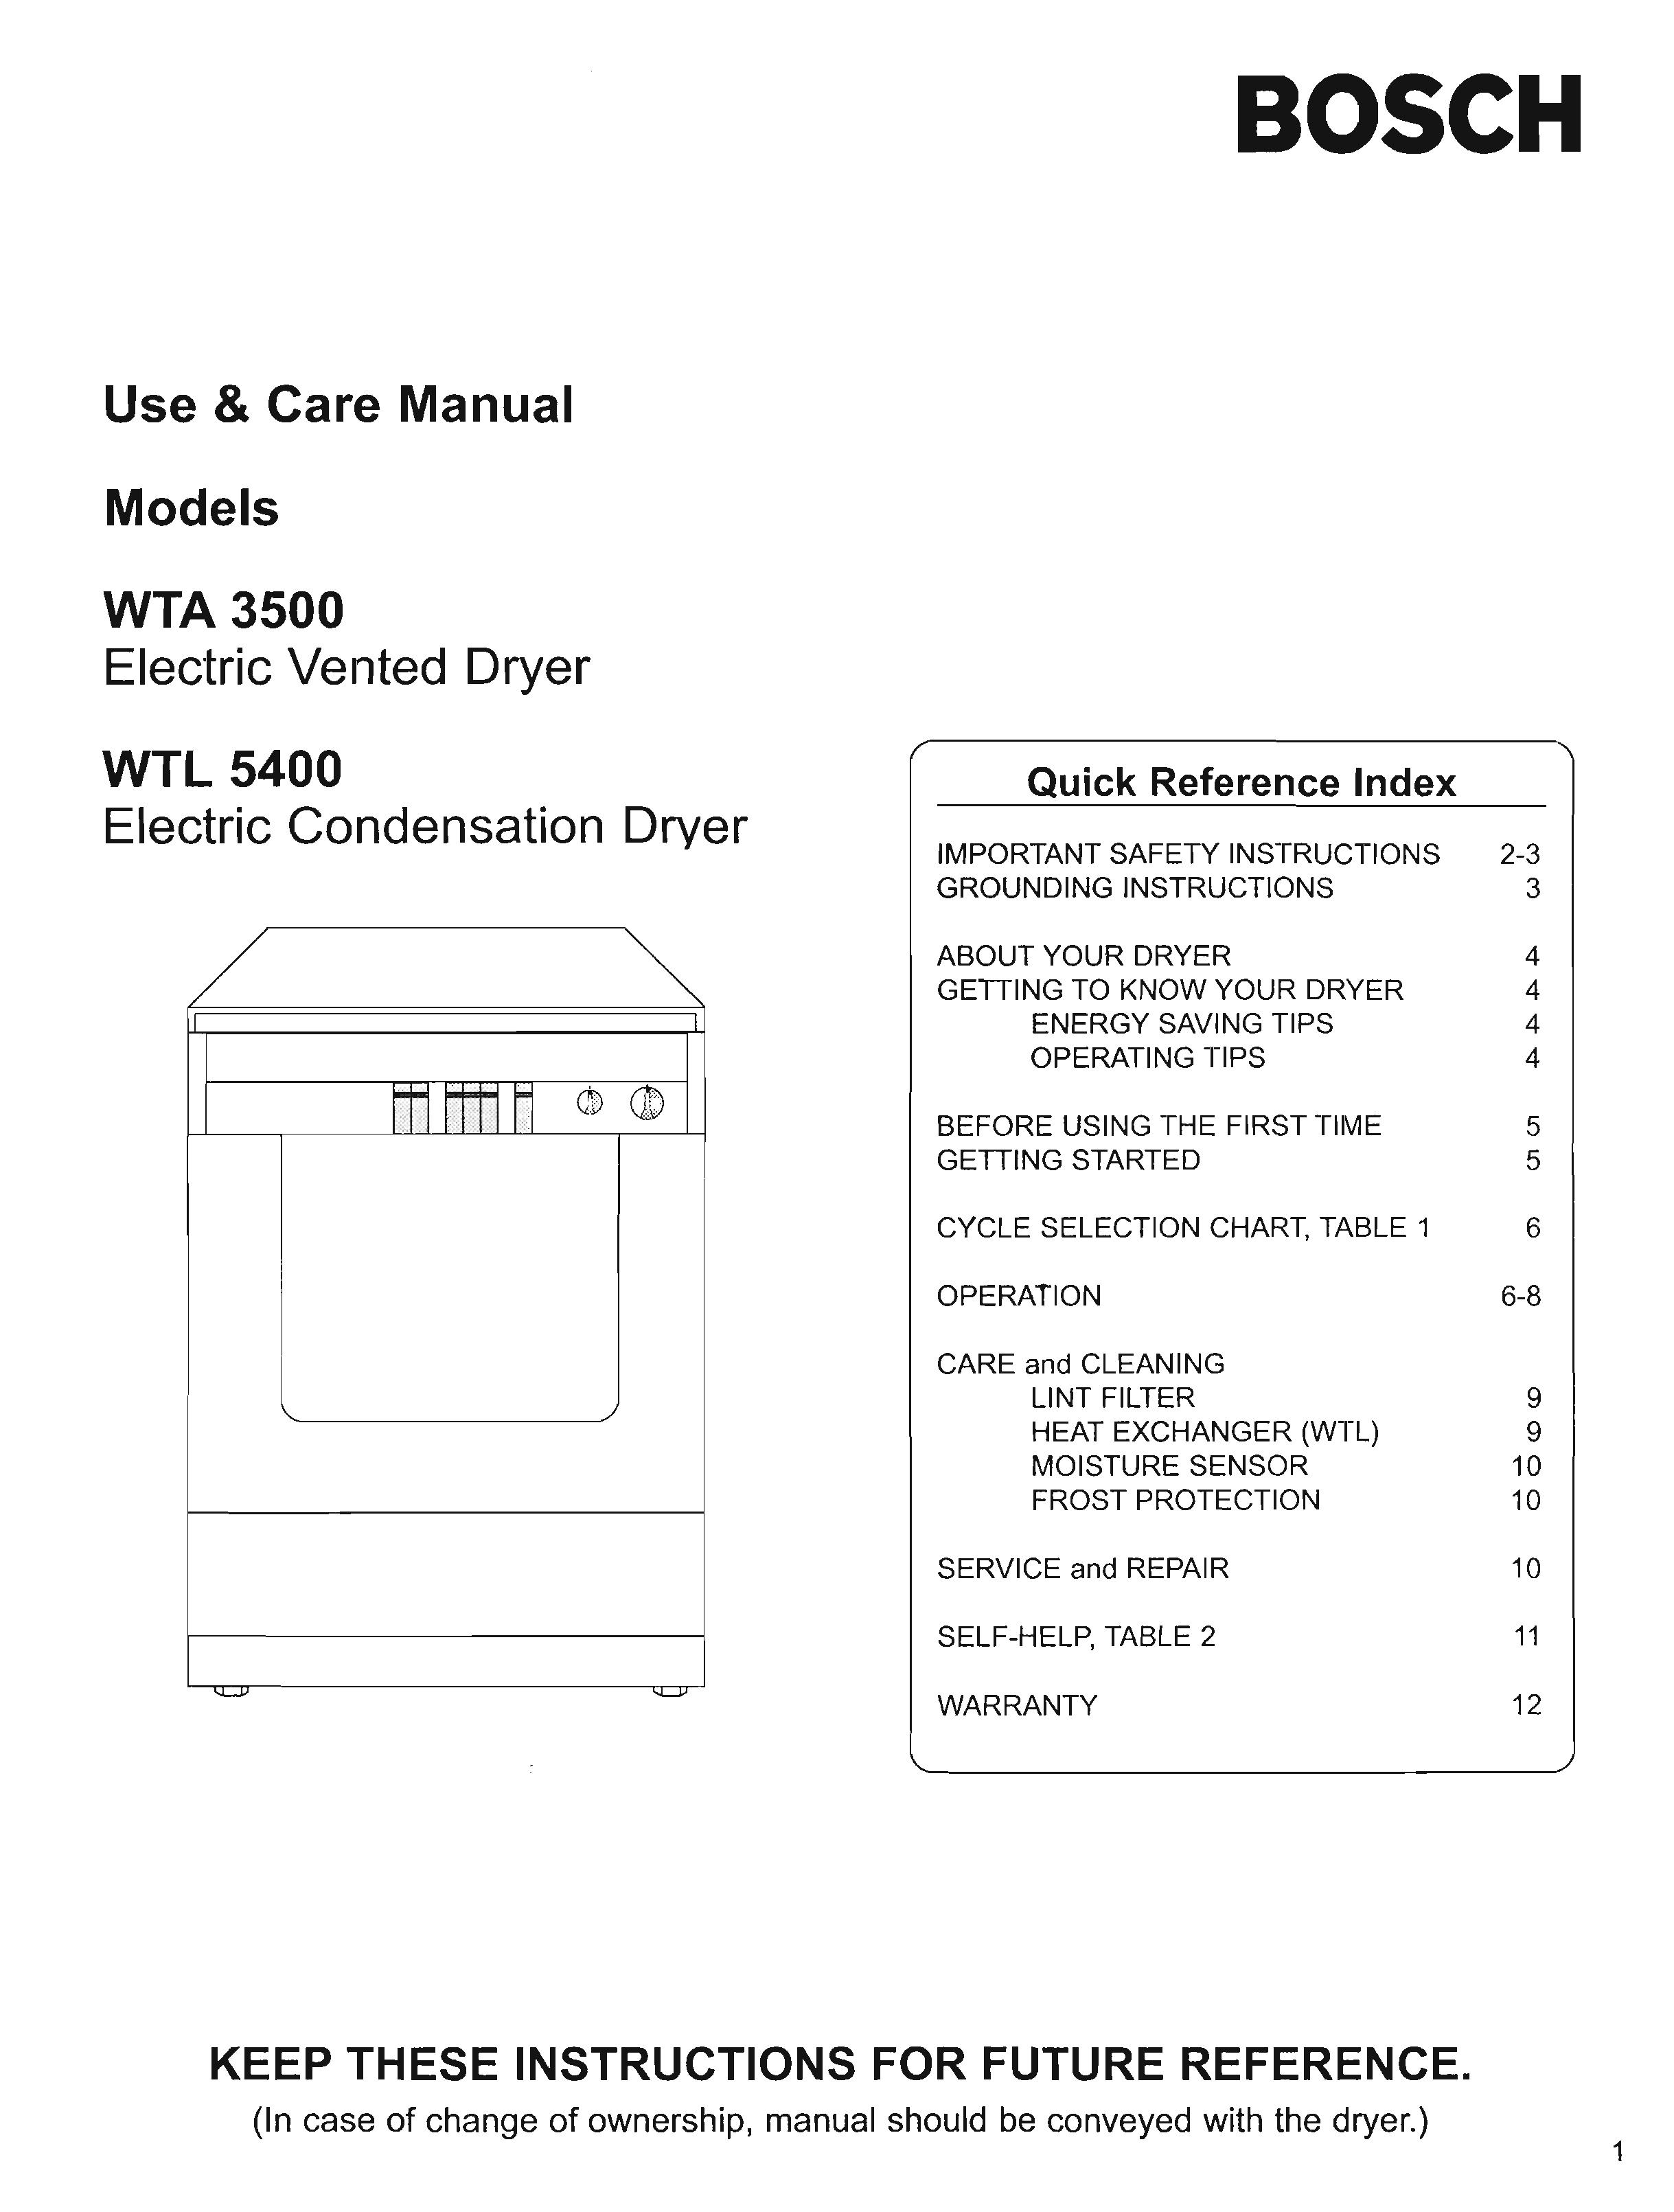 Bosch Appliances WTA 3500 Clothes Dryer User Manual